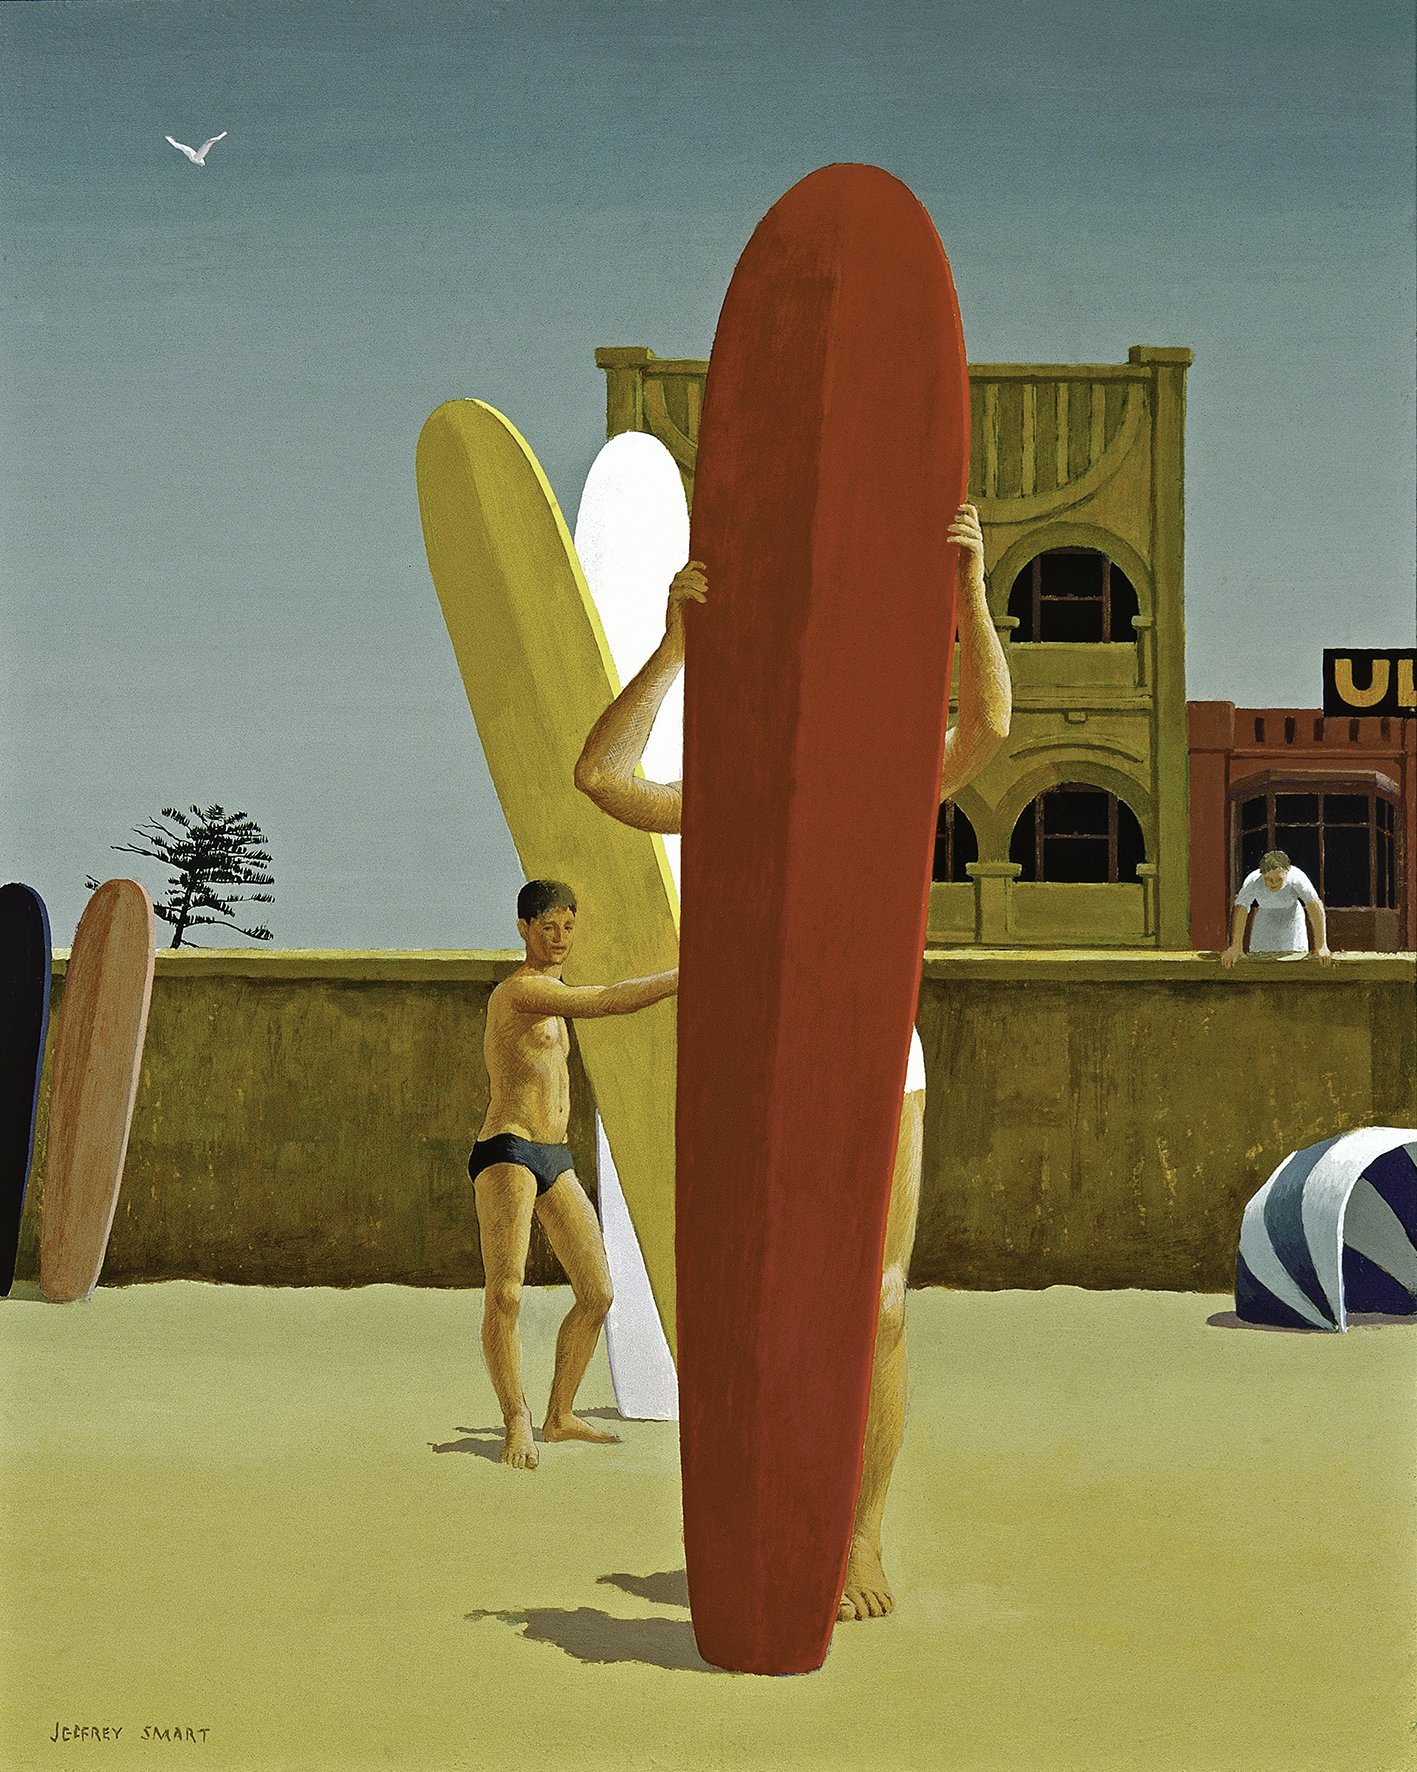 Jeffrey Smart. Surfer's Bondi, 1963